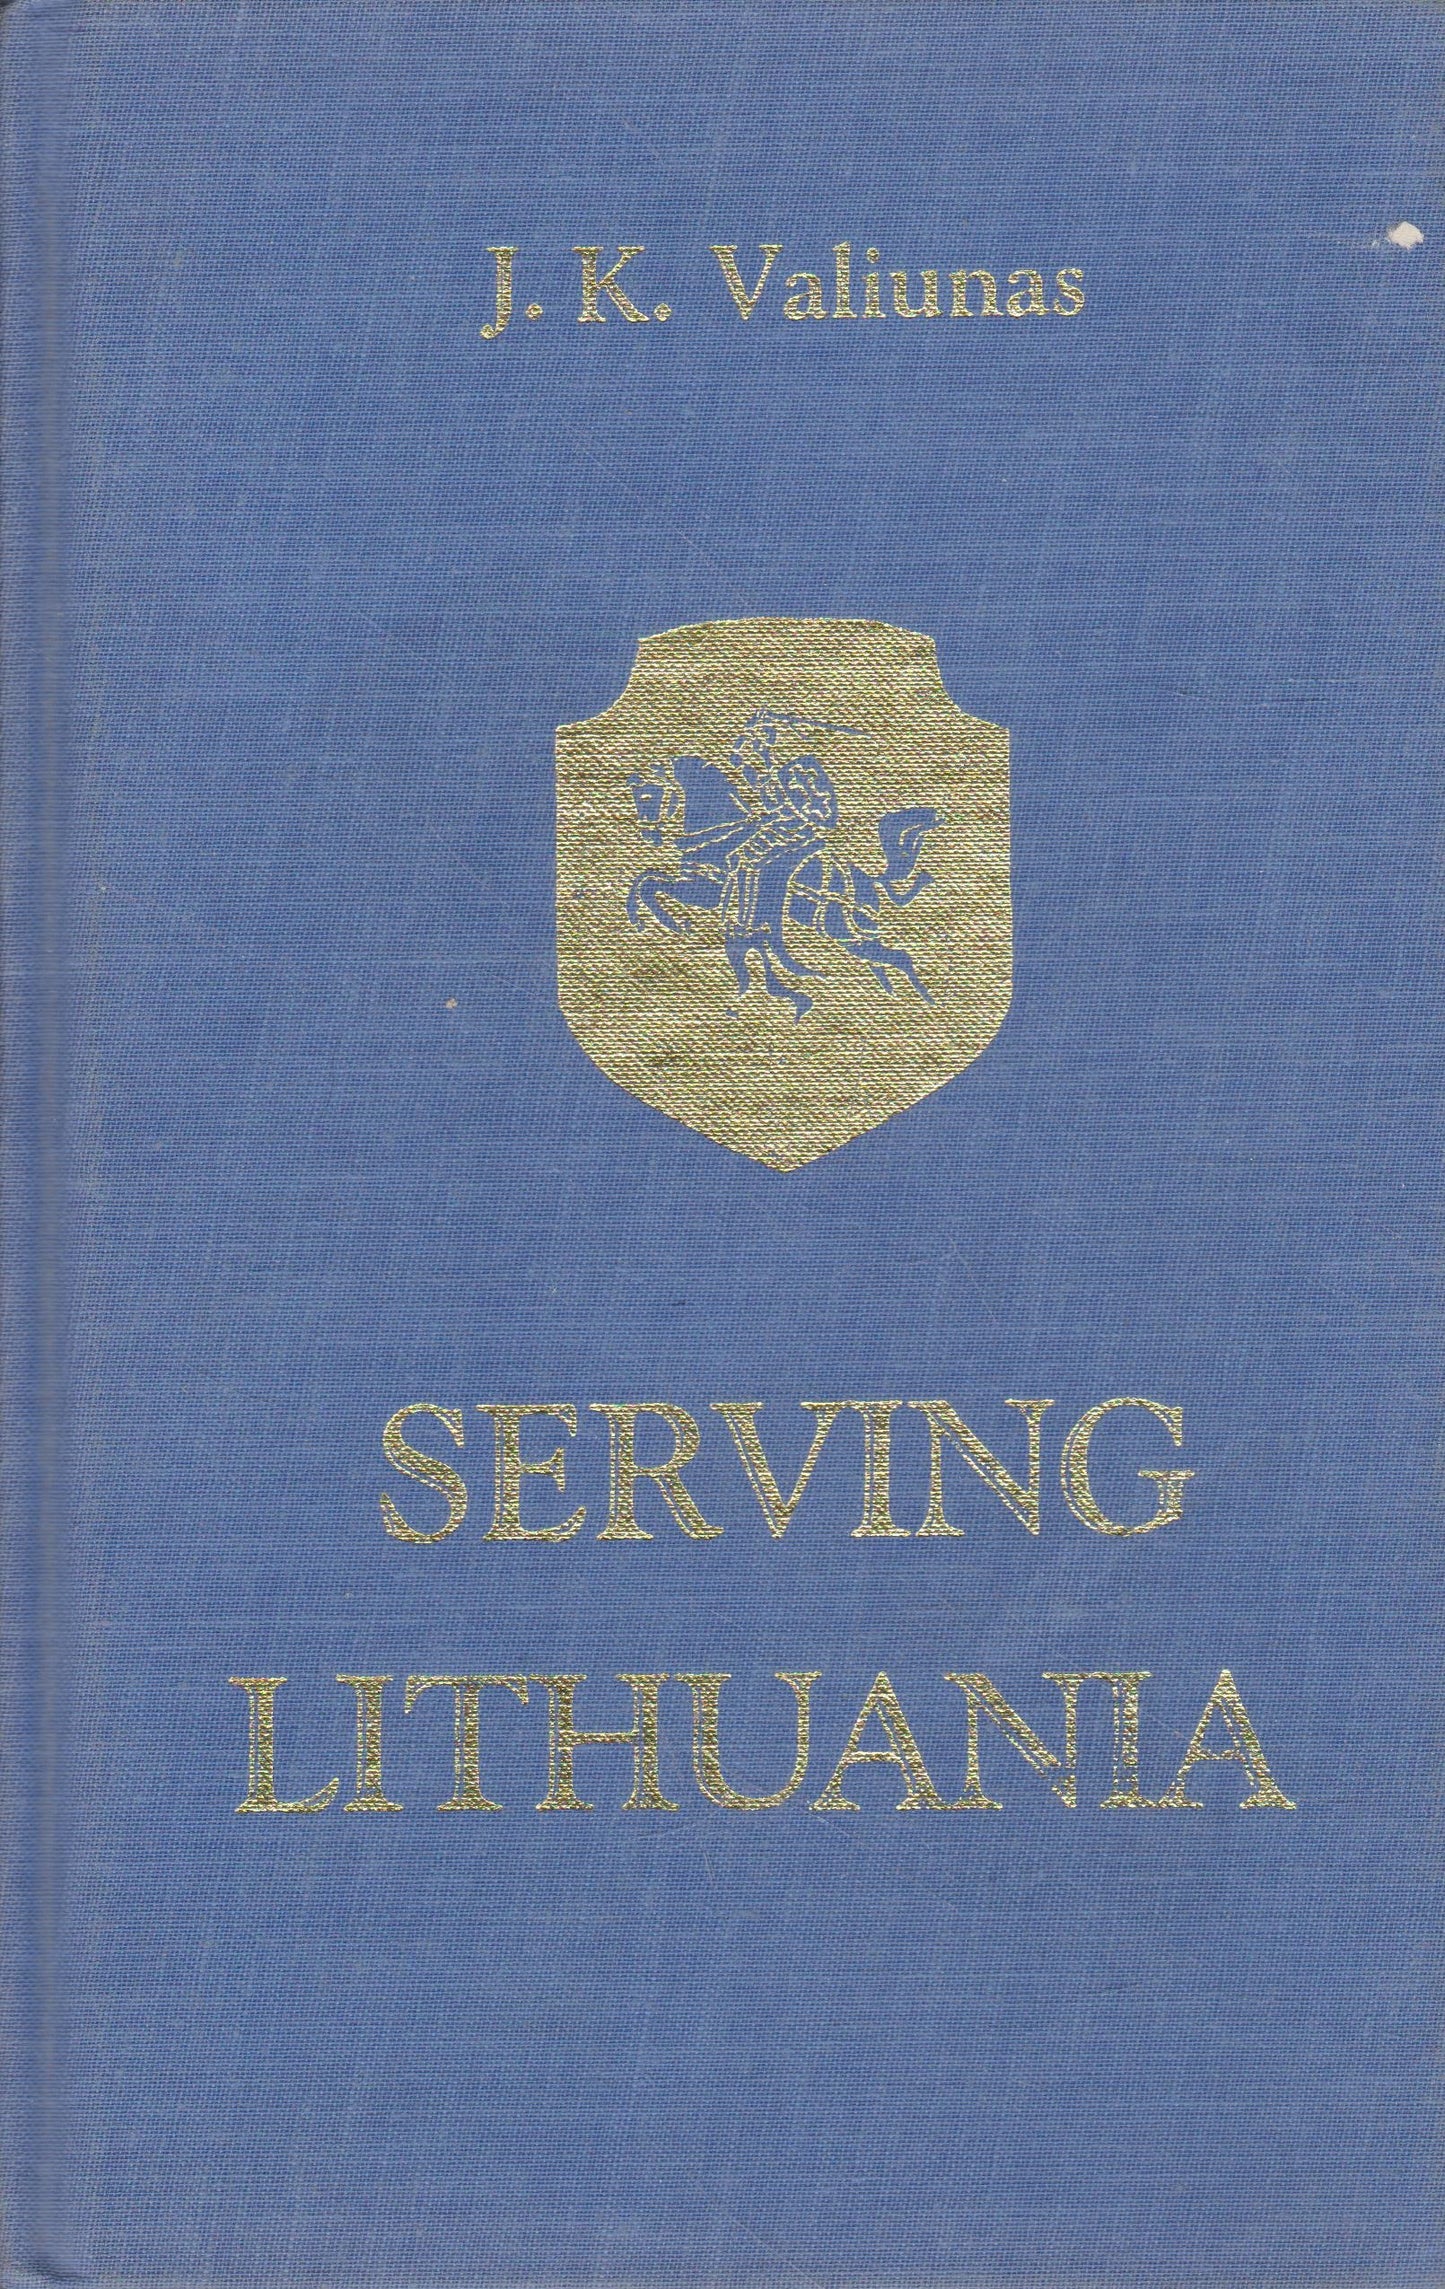 J.K. Valiunas - Serving Lithuania, NY, 1988 m.